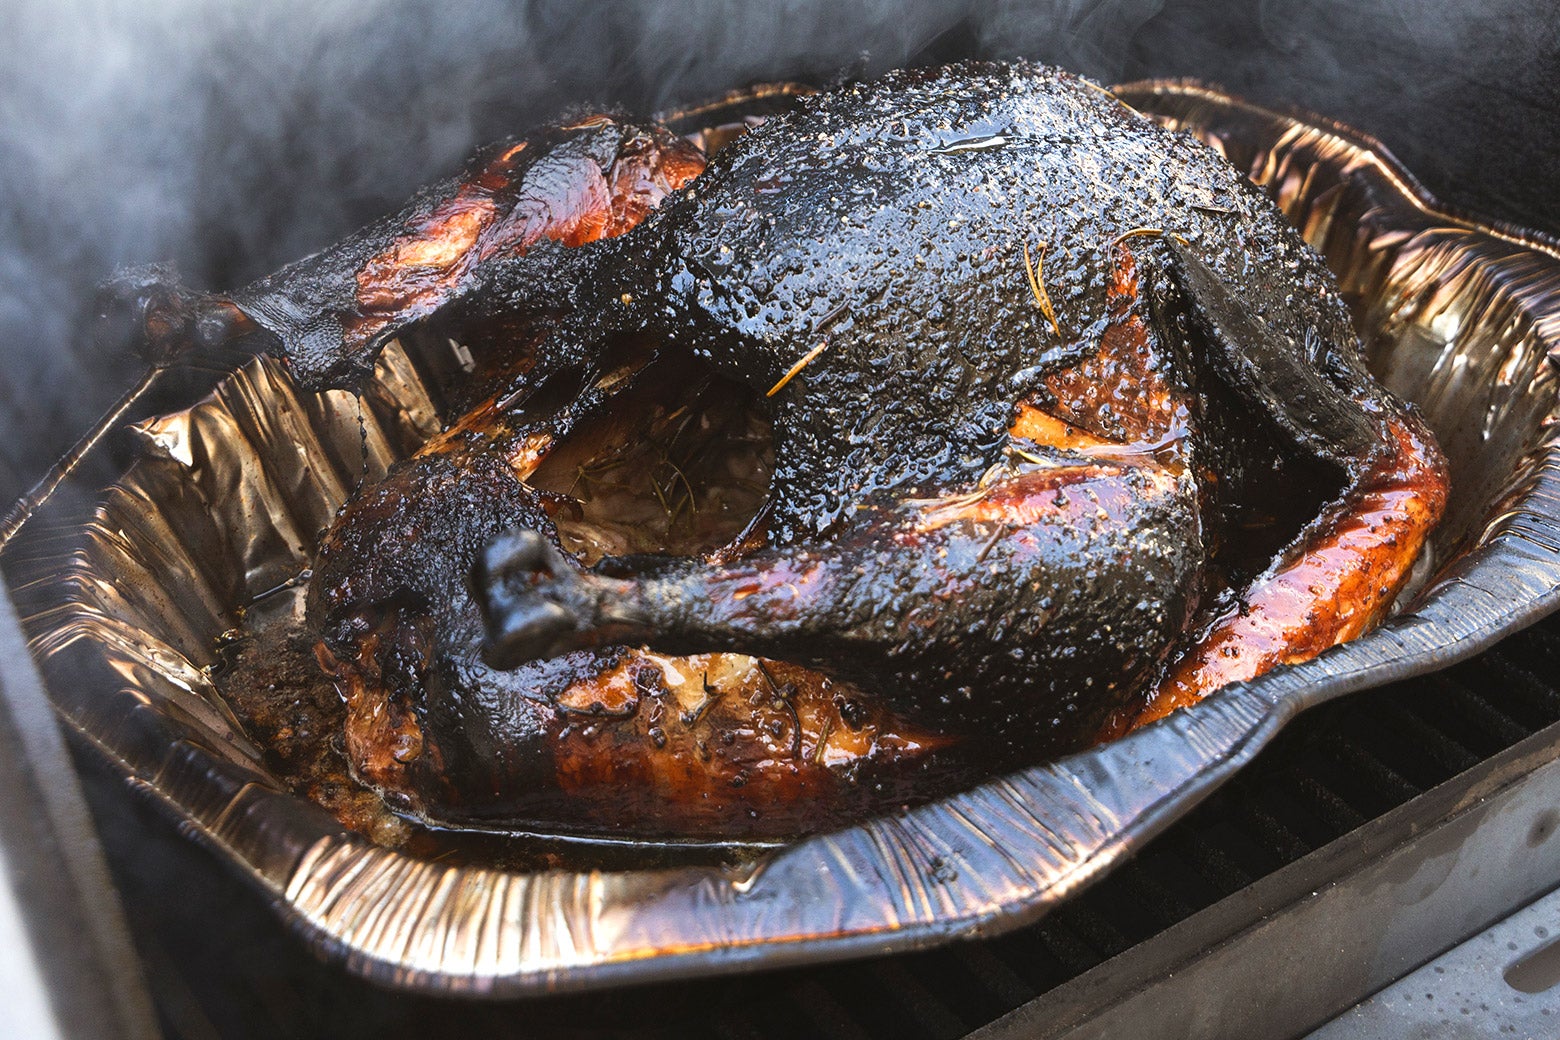 A burnt turkey in an aluminum pan.